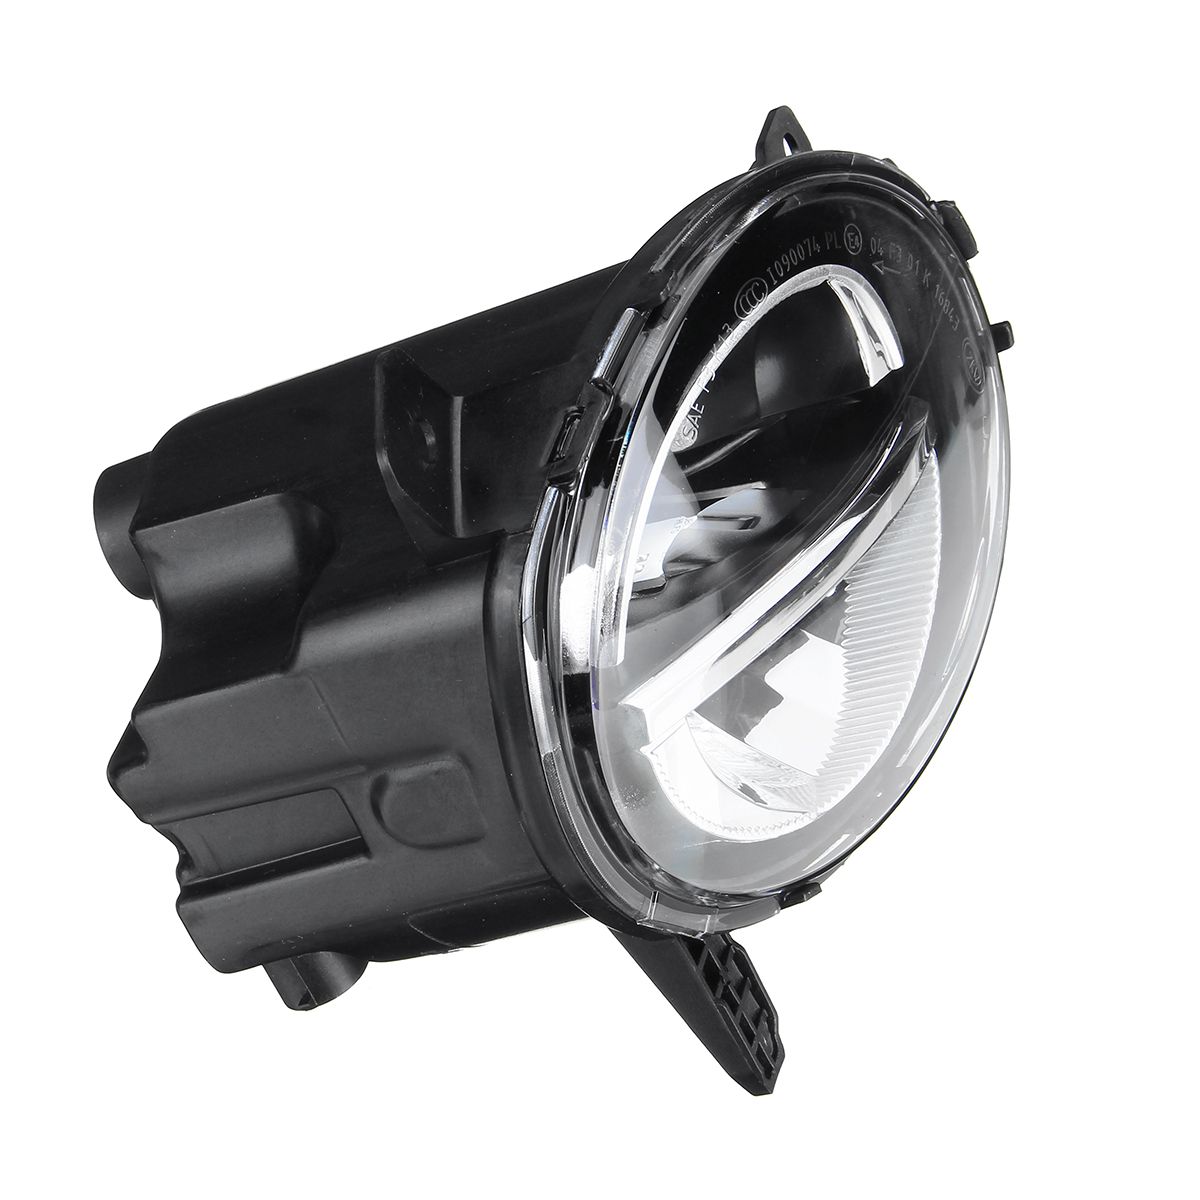 Pair-Front-LED-Fog-Light-Lamp-For-BMW-F20-F22-F30-F35-LCI-1-2-3-4-1731843